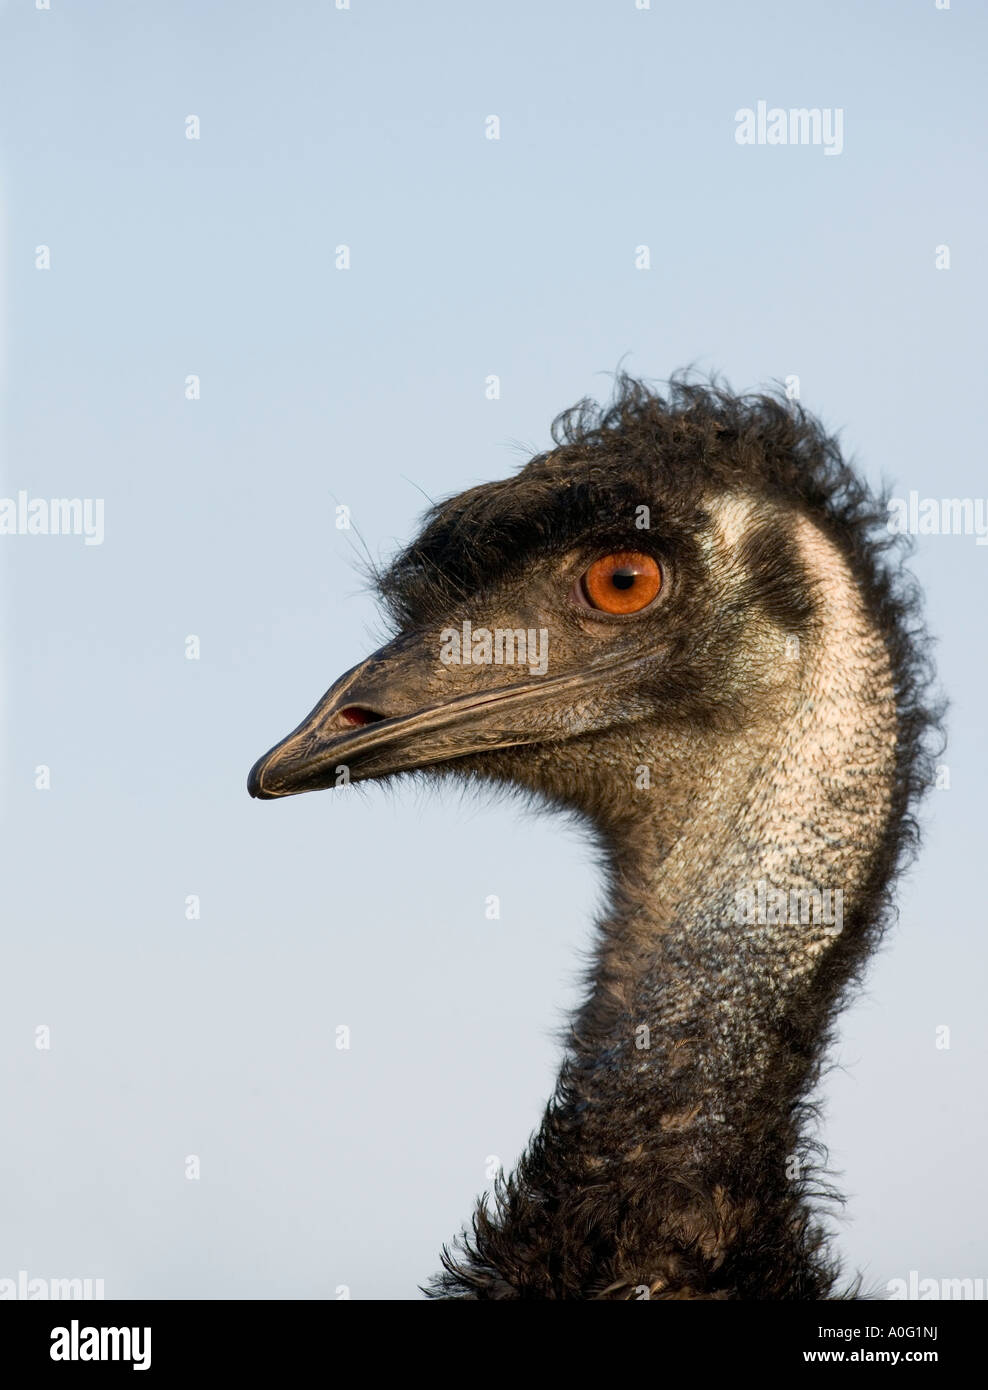 EMU Dromaius novaehollandiae Stock Photo